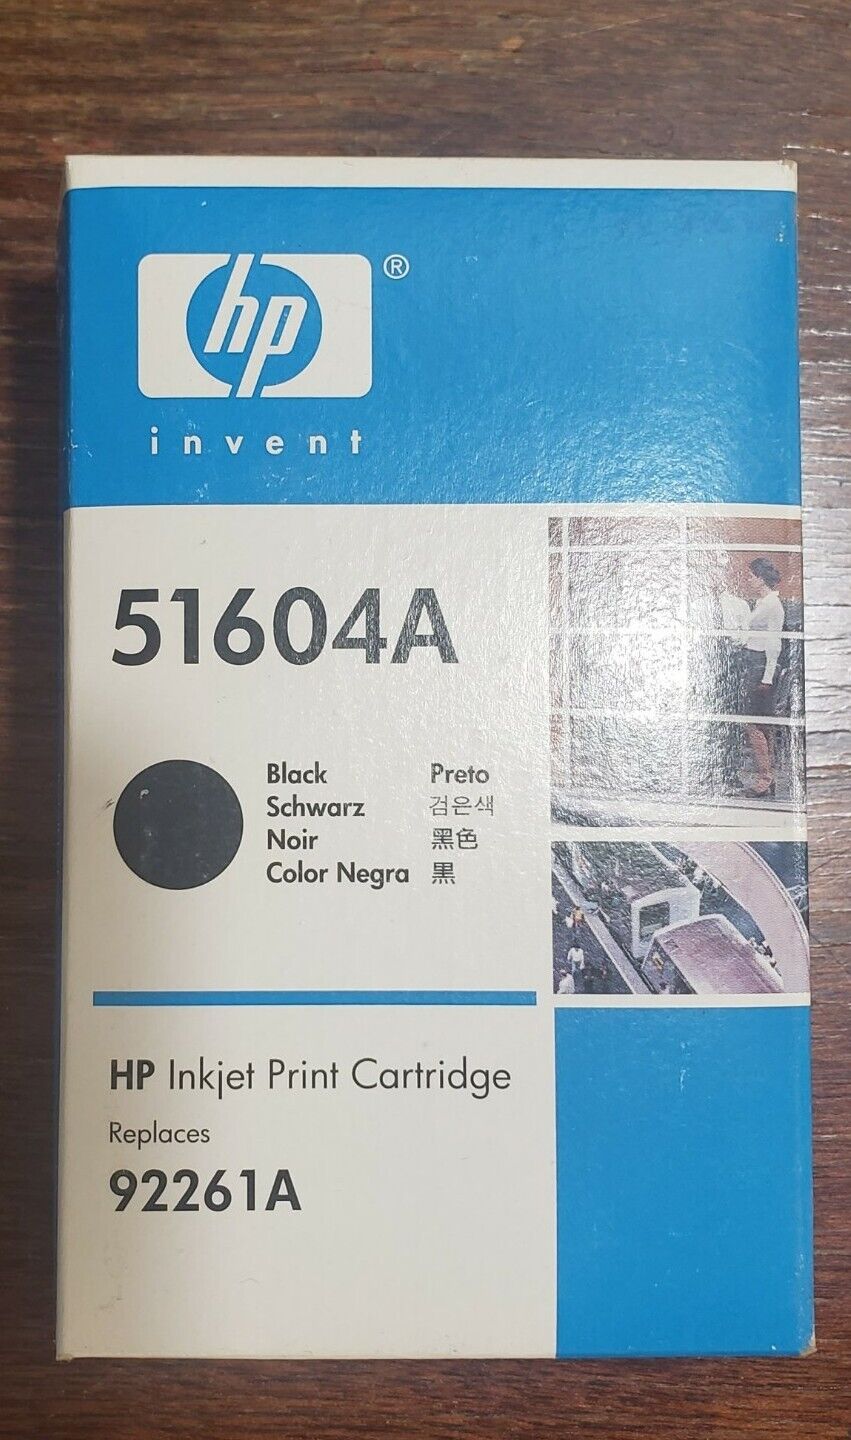 Genuine HP 51604A Black Inkjet Print Cartridge. Replaces 92261A. Sealed box